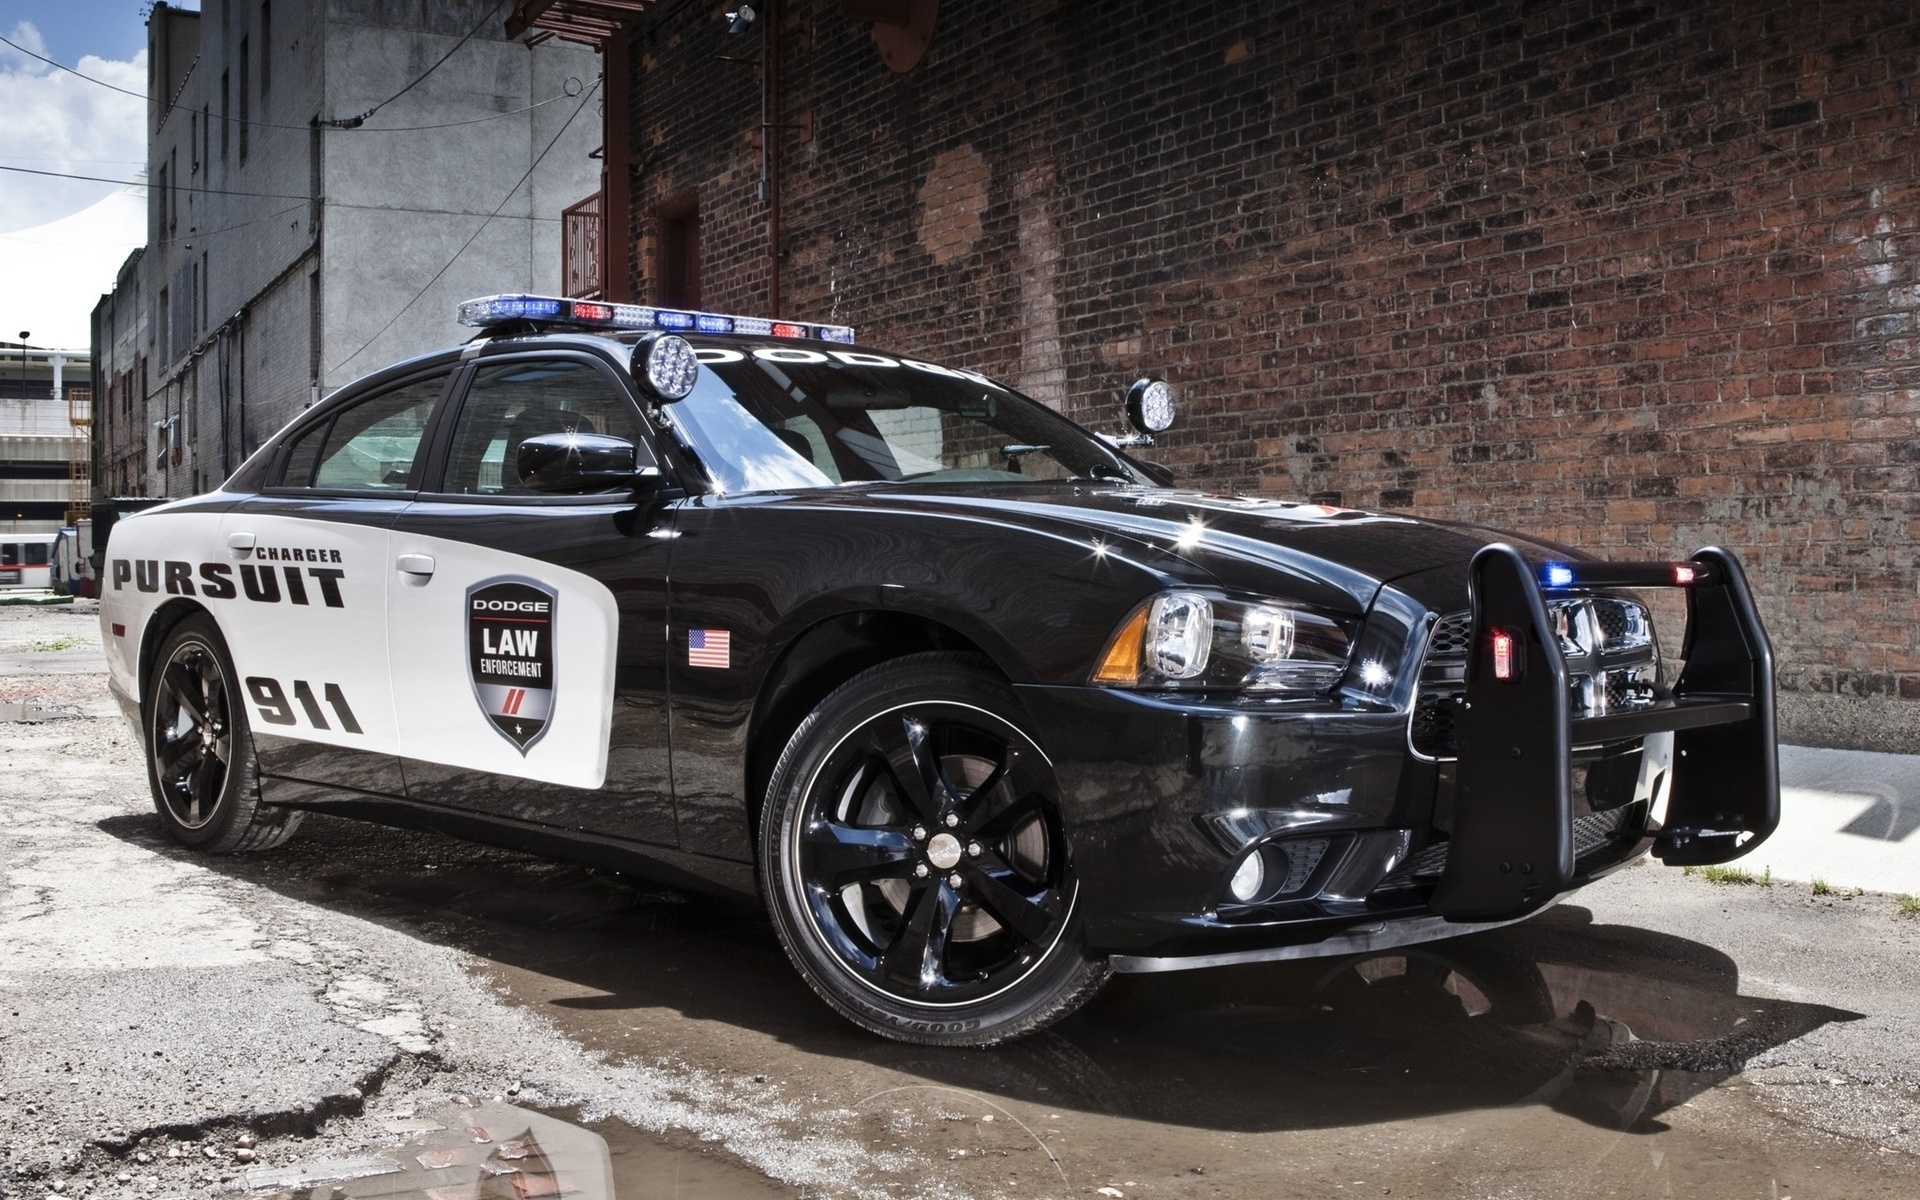 [43+] Cool Police Cars Wallpaper on WallpaperSafari